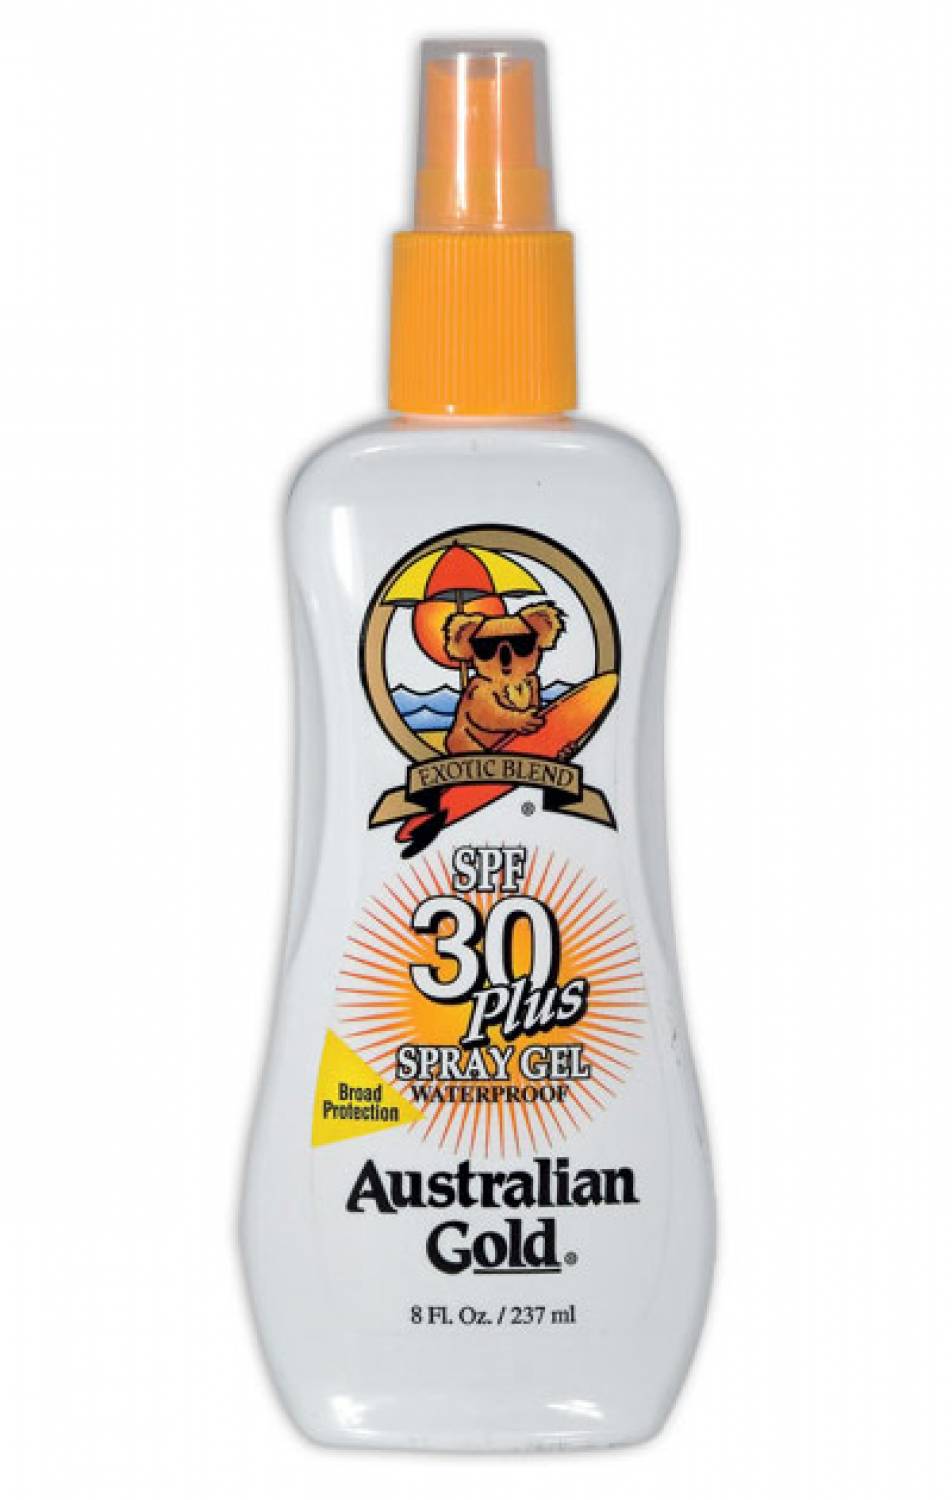 Australian Gold SPF 30 Gel spray amplio stock!